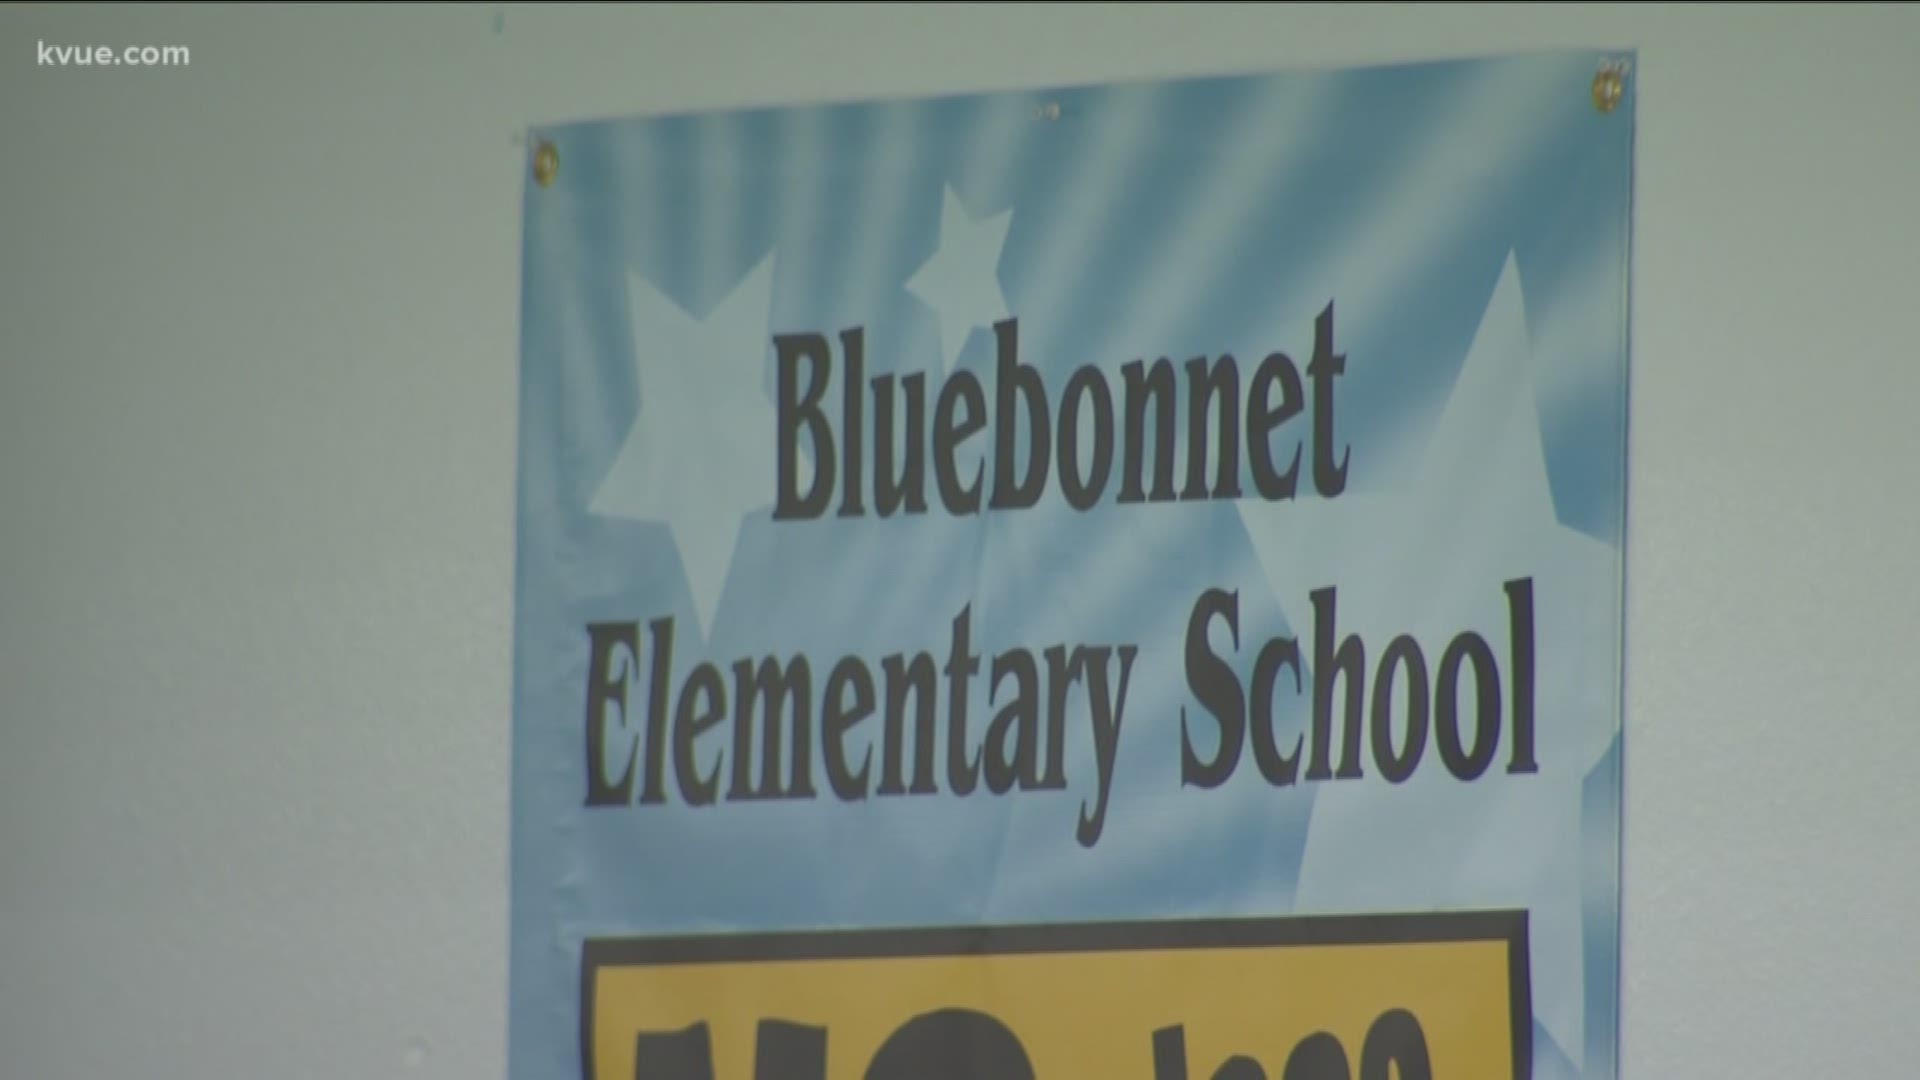 Burlington Stores donated $10,000 to teachers at Bluebonnet Elementary School through its "Adopt a Classroom" program.